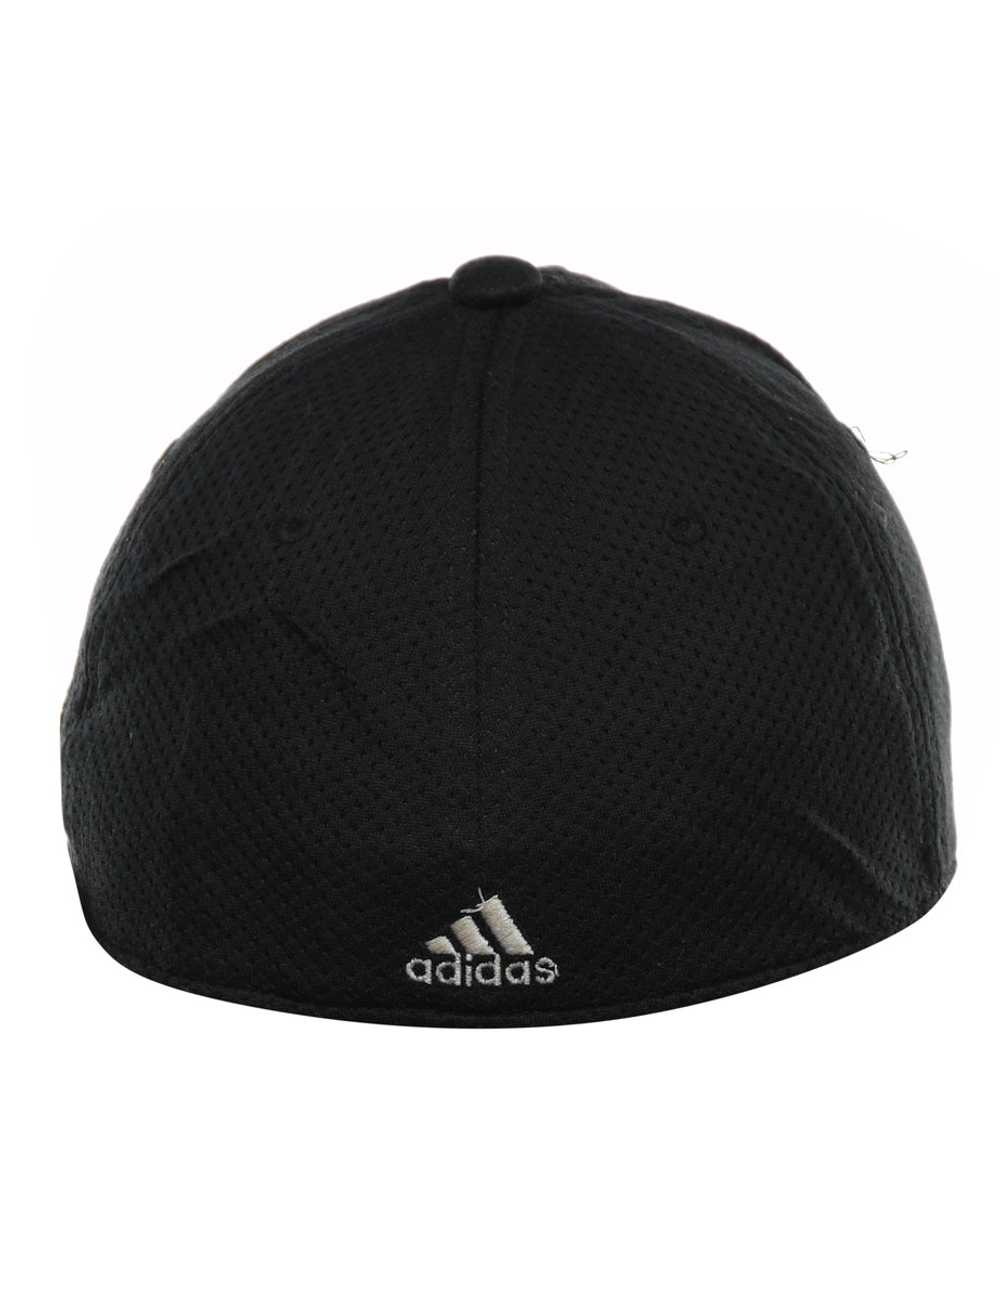 Adidas Black Sporty Cap - M - image 2